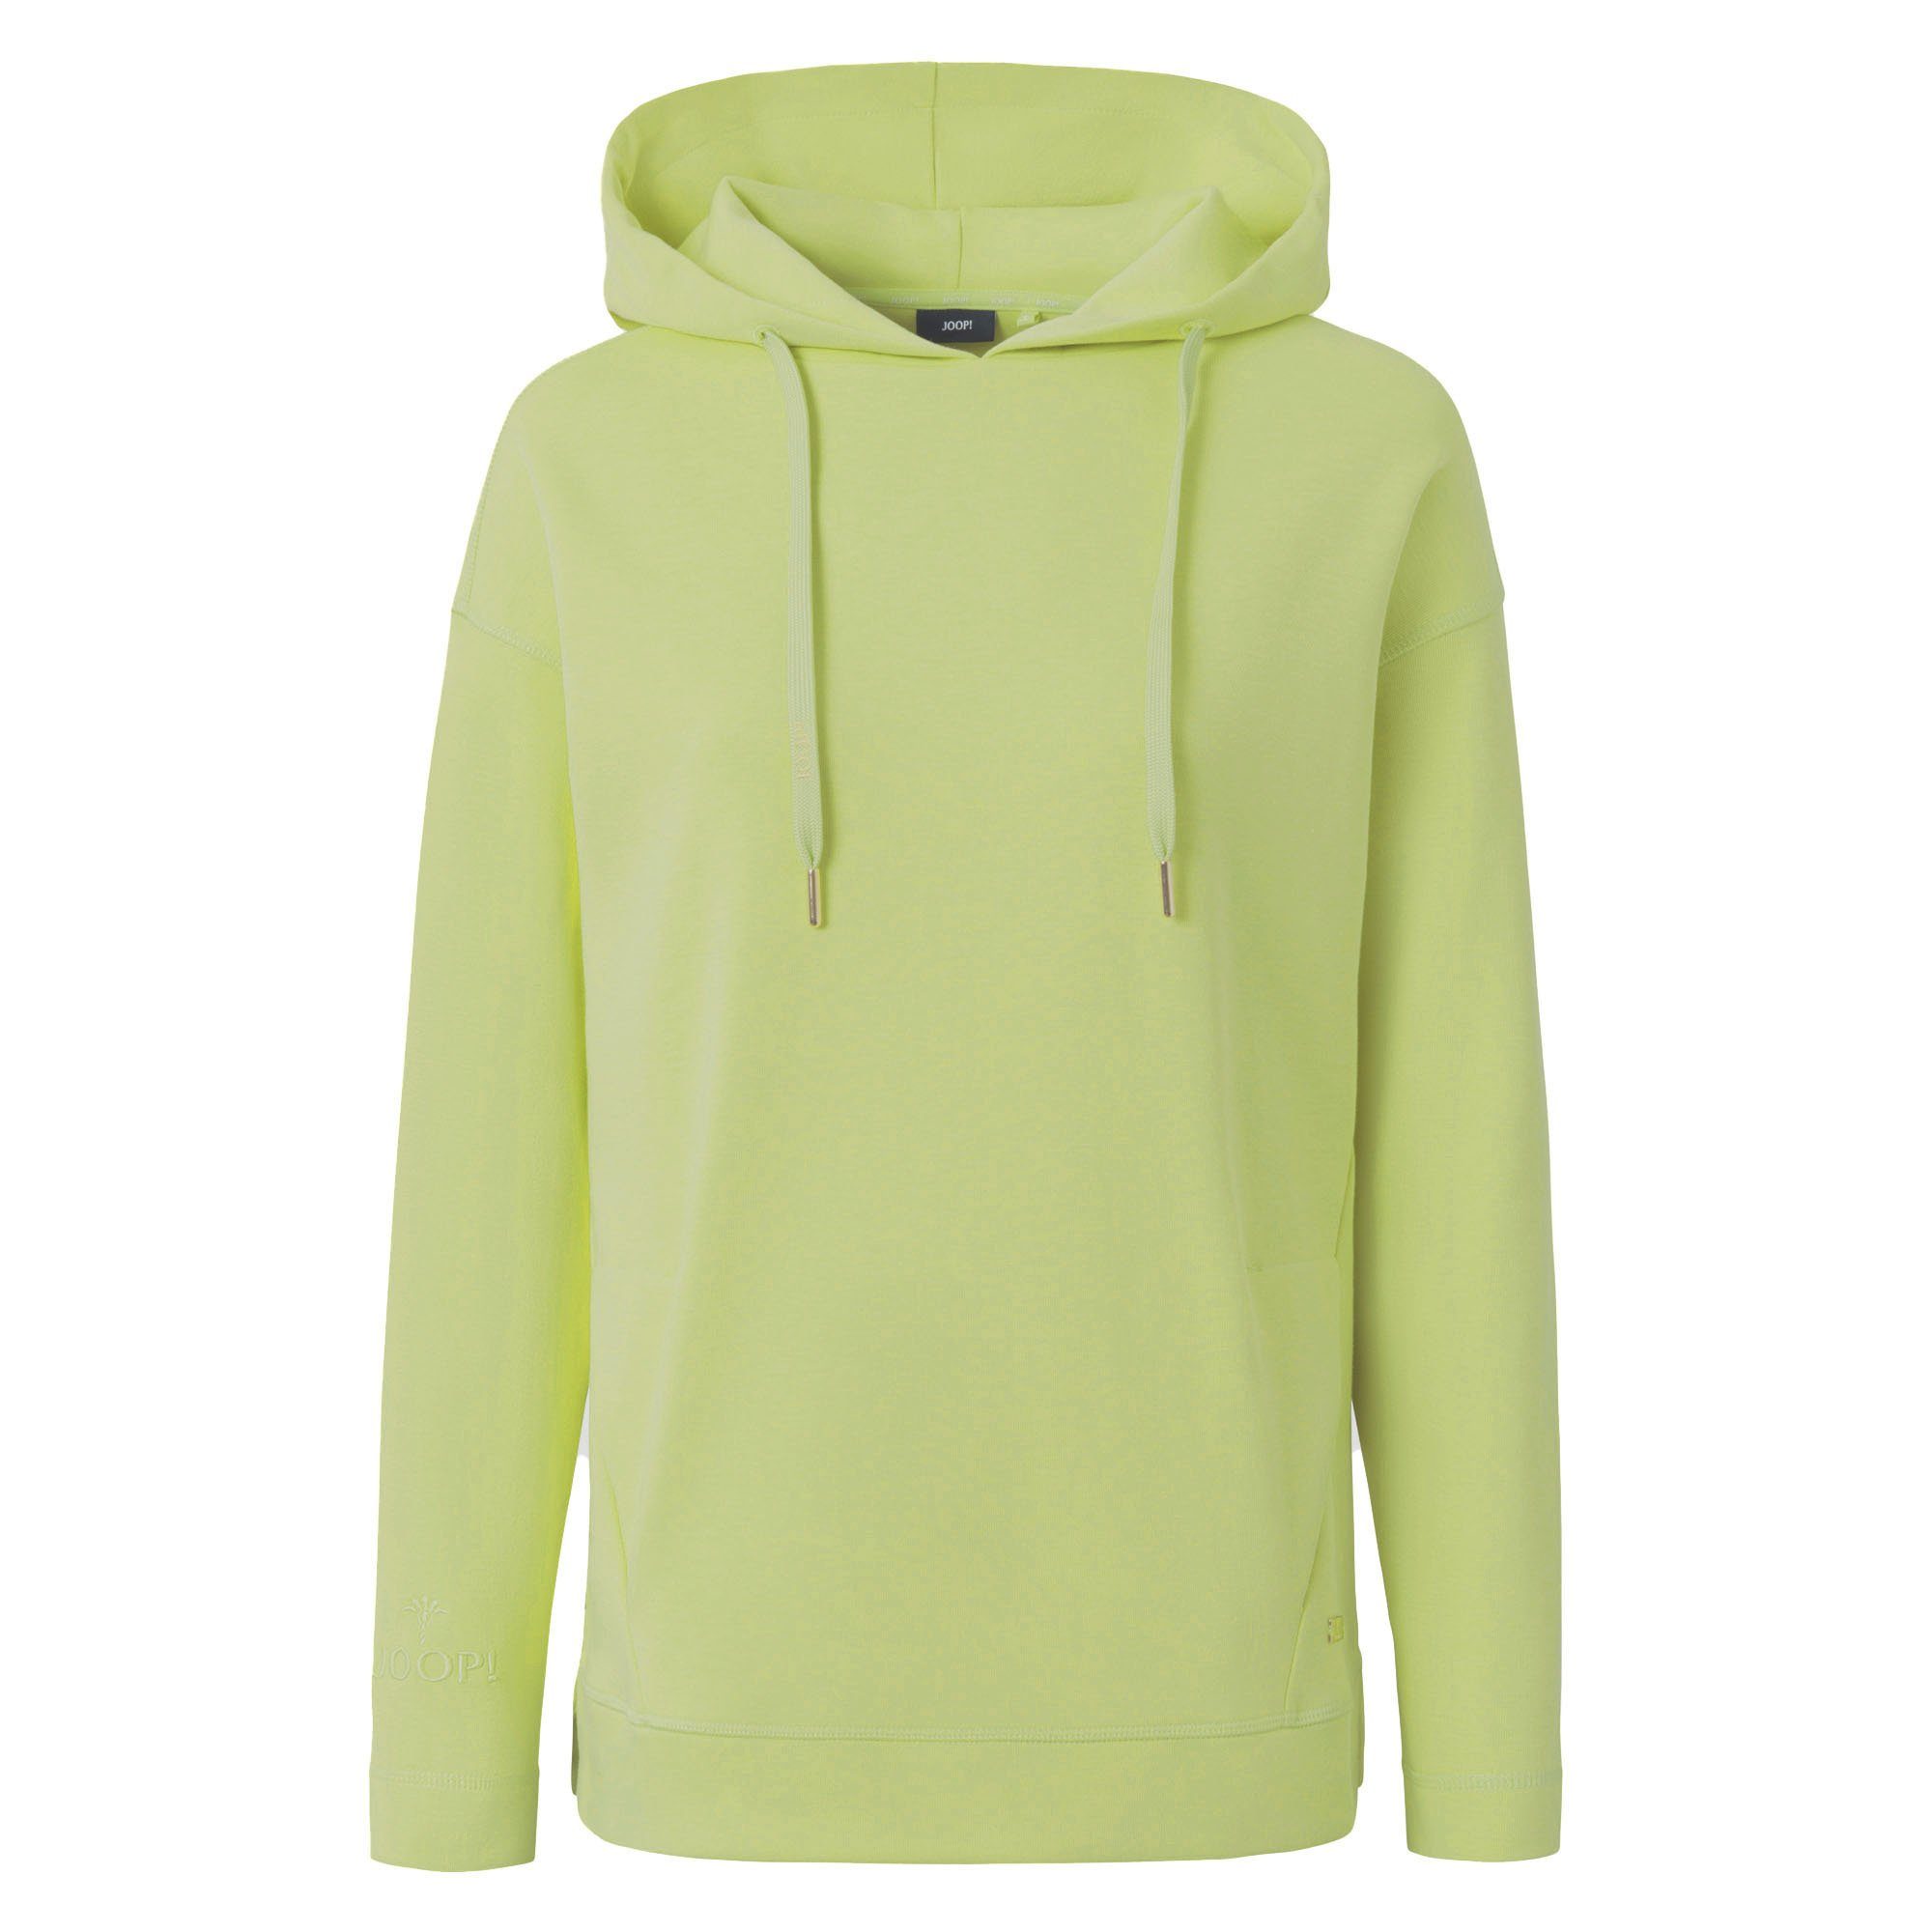 Joop! Sweater Damen Hoodie - Sweatshirt, Sweater, Loungewear Grün (Bright Green)